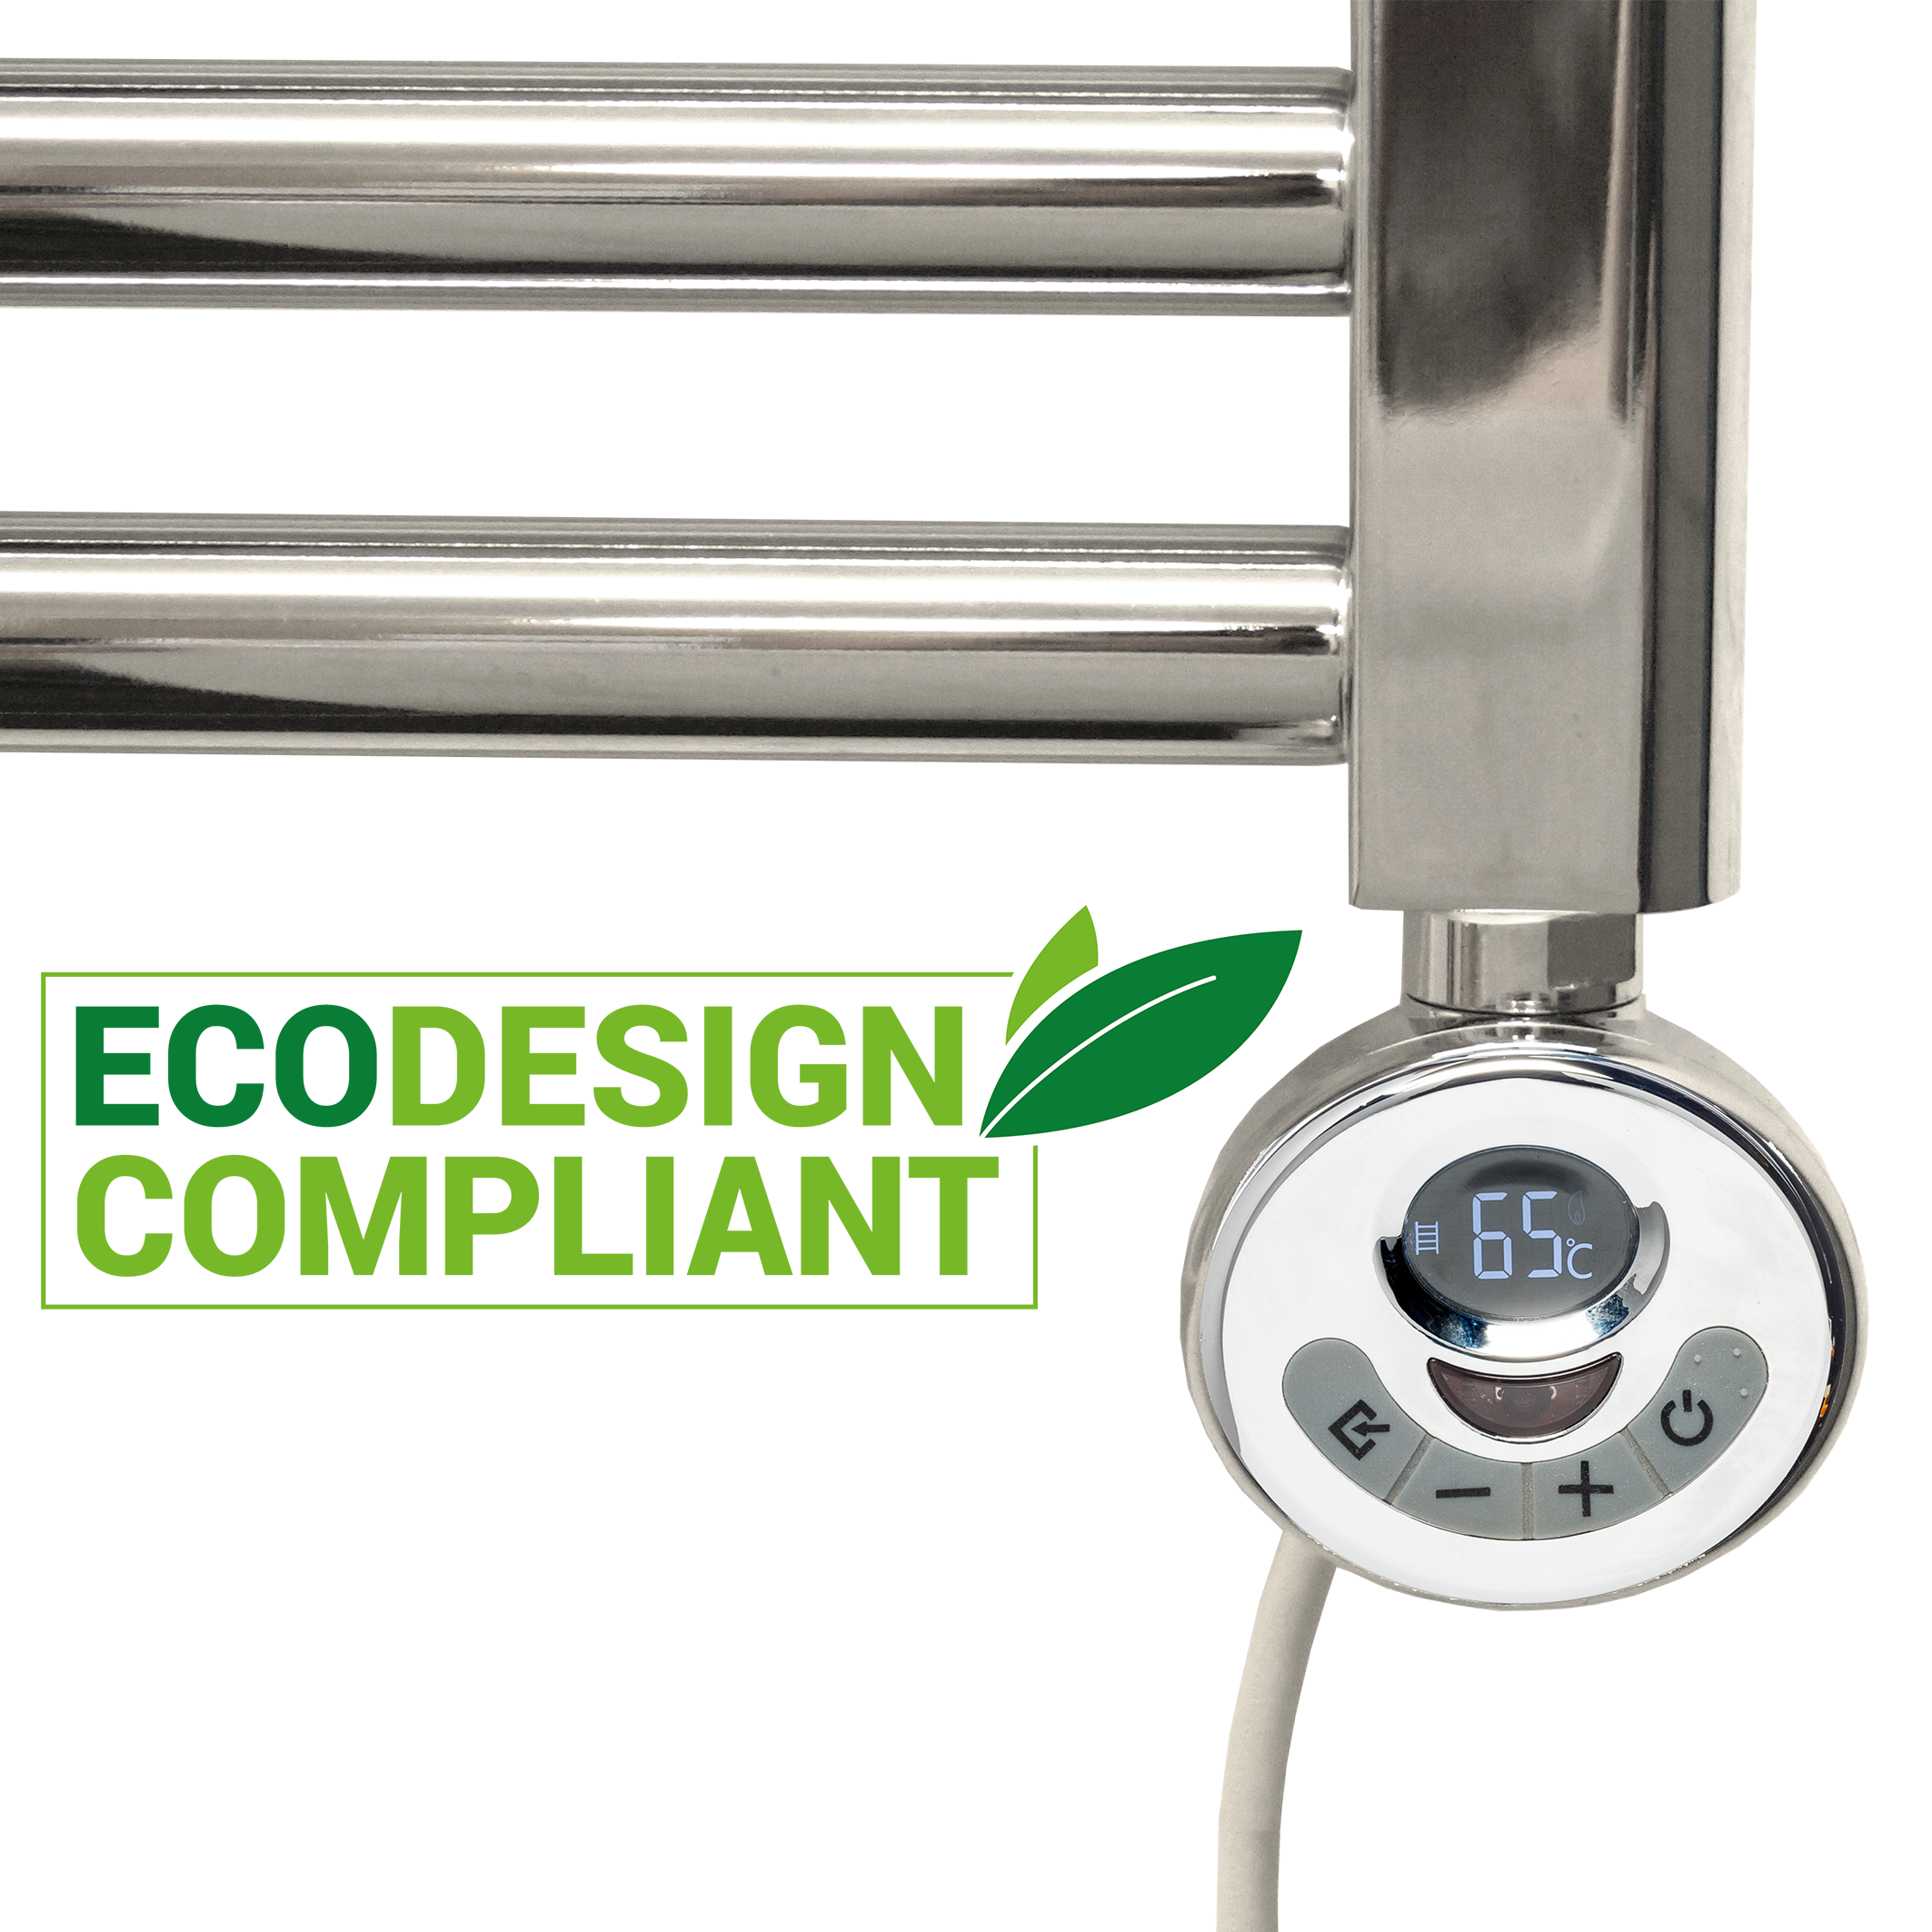 New Eco Design Compliant EE005 Remote Control Element by Vogue (UK) @vogueukltd